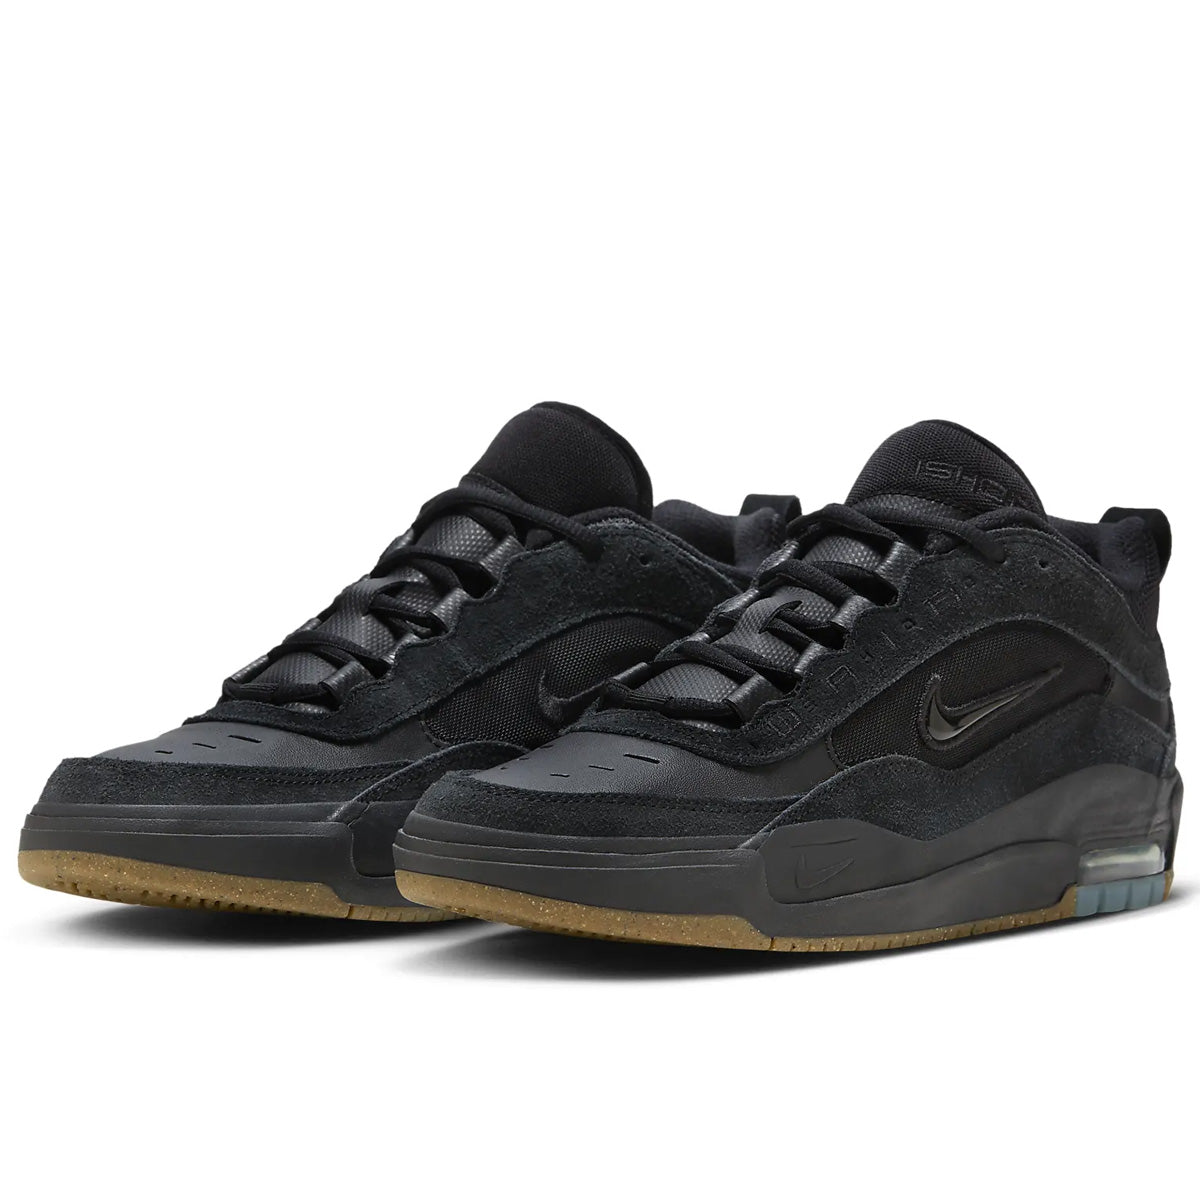 Nike SB Air Max Ishod Black/Black/Anthracite/Black